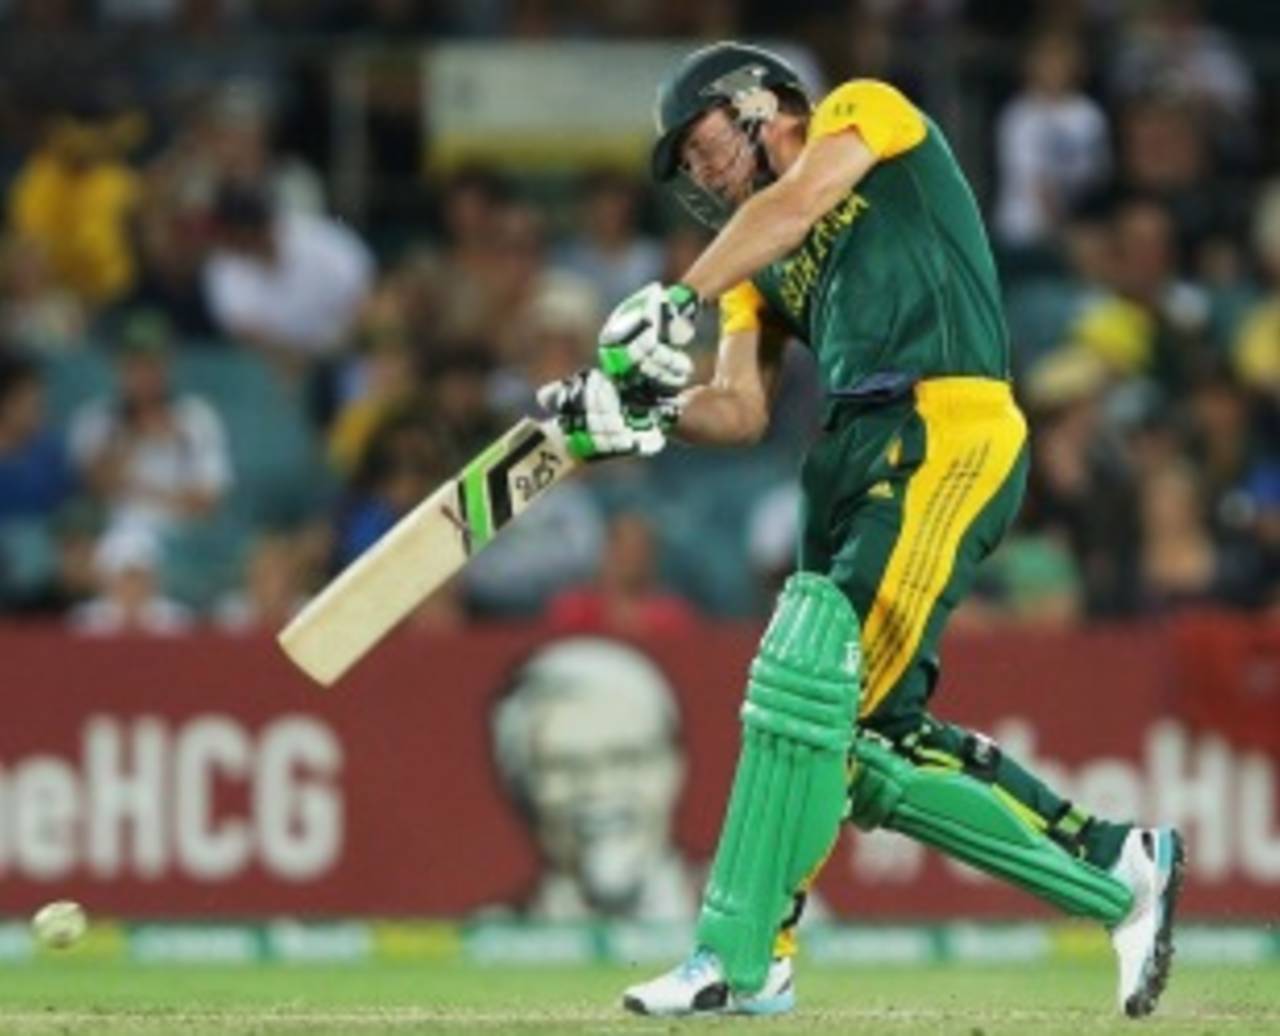 'I got out at a bad time' - AB de Villiers&nbsp;&nbsp;&bull;&nbsp;&nbsp;Getty Images